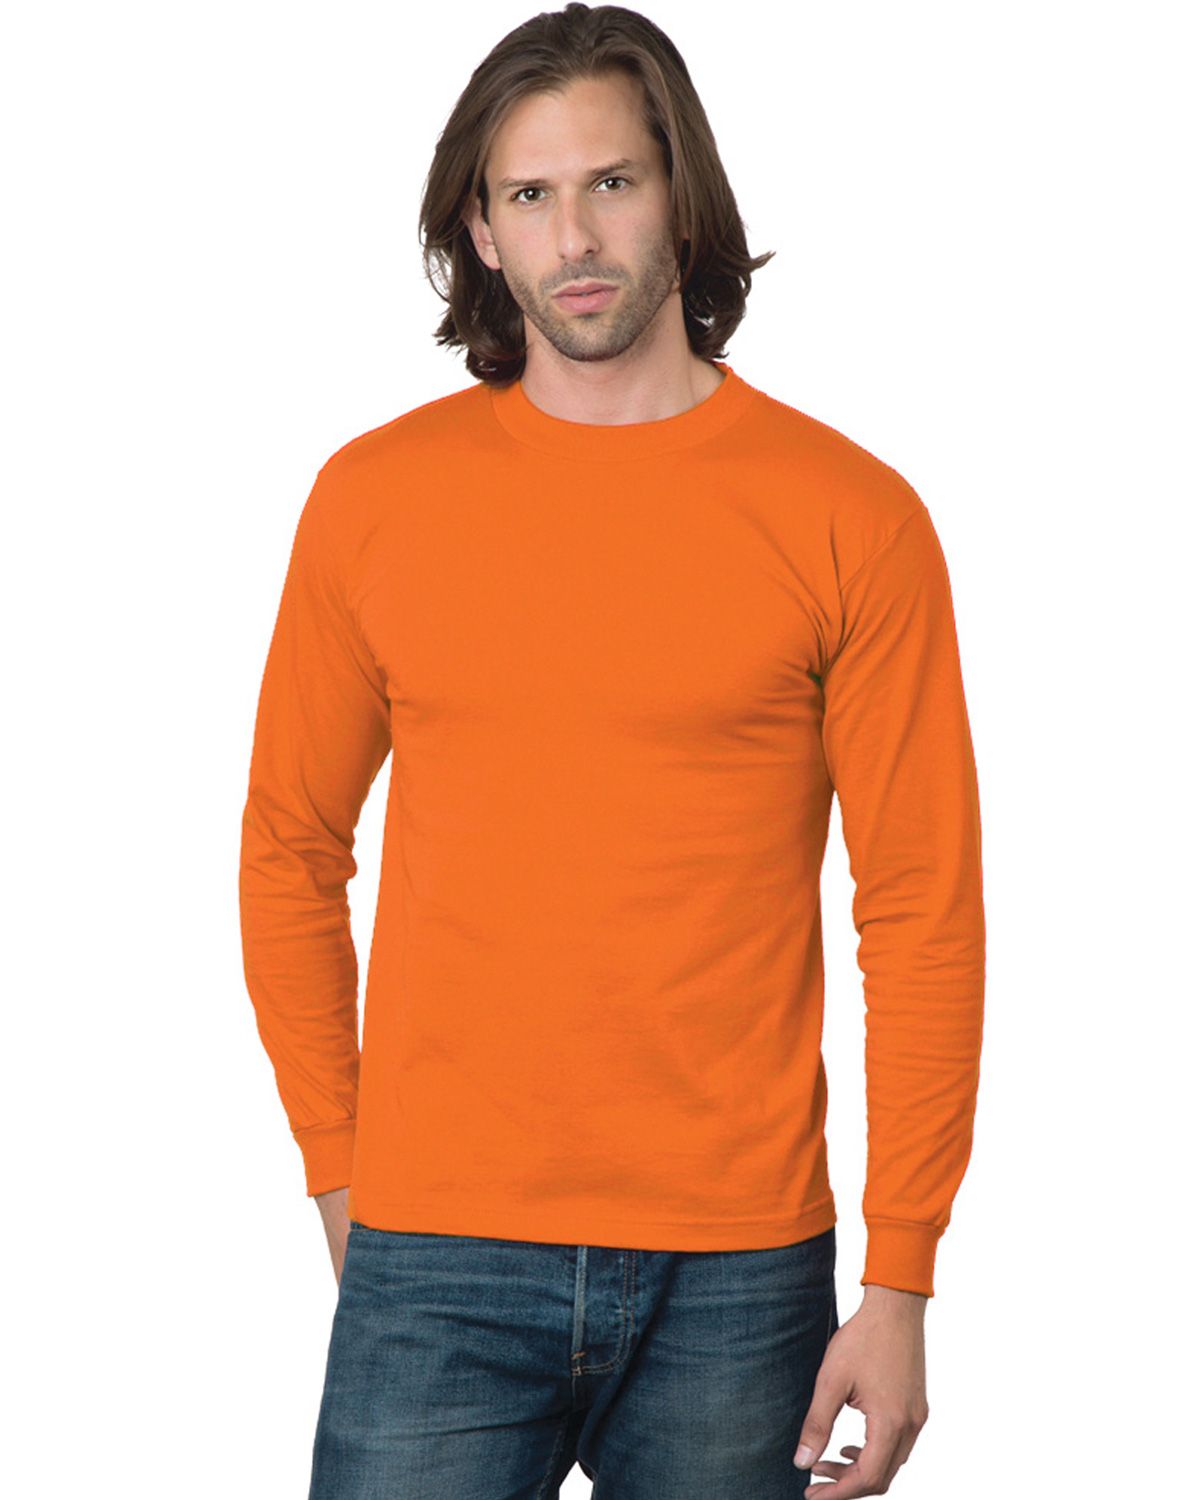 Bayside BA2955 Adult 6.1 oz.; Cotton Long Sleeve T-Shirt